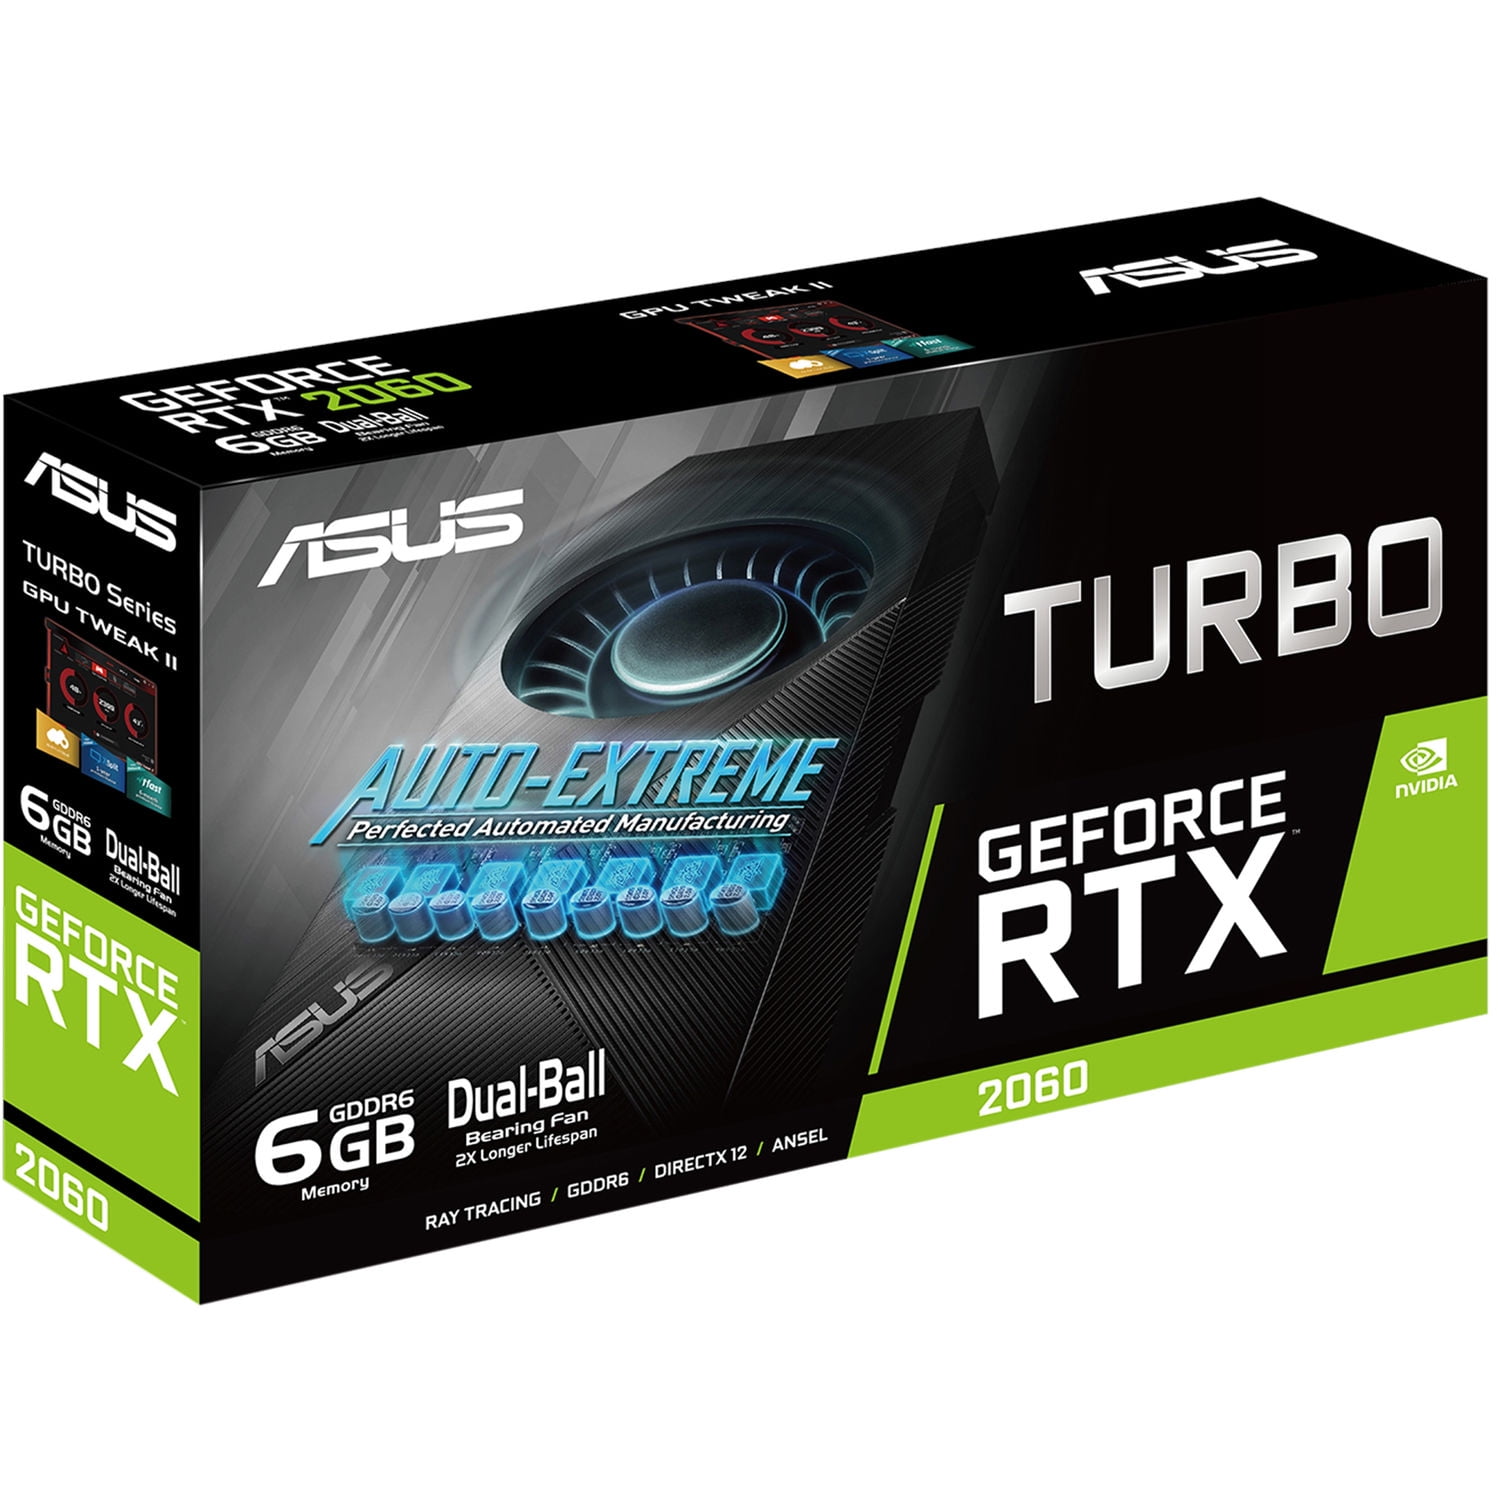 Turbo GeForce RTX 2060 Graphics Card - Walmart.com